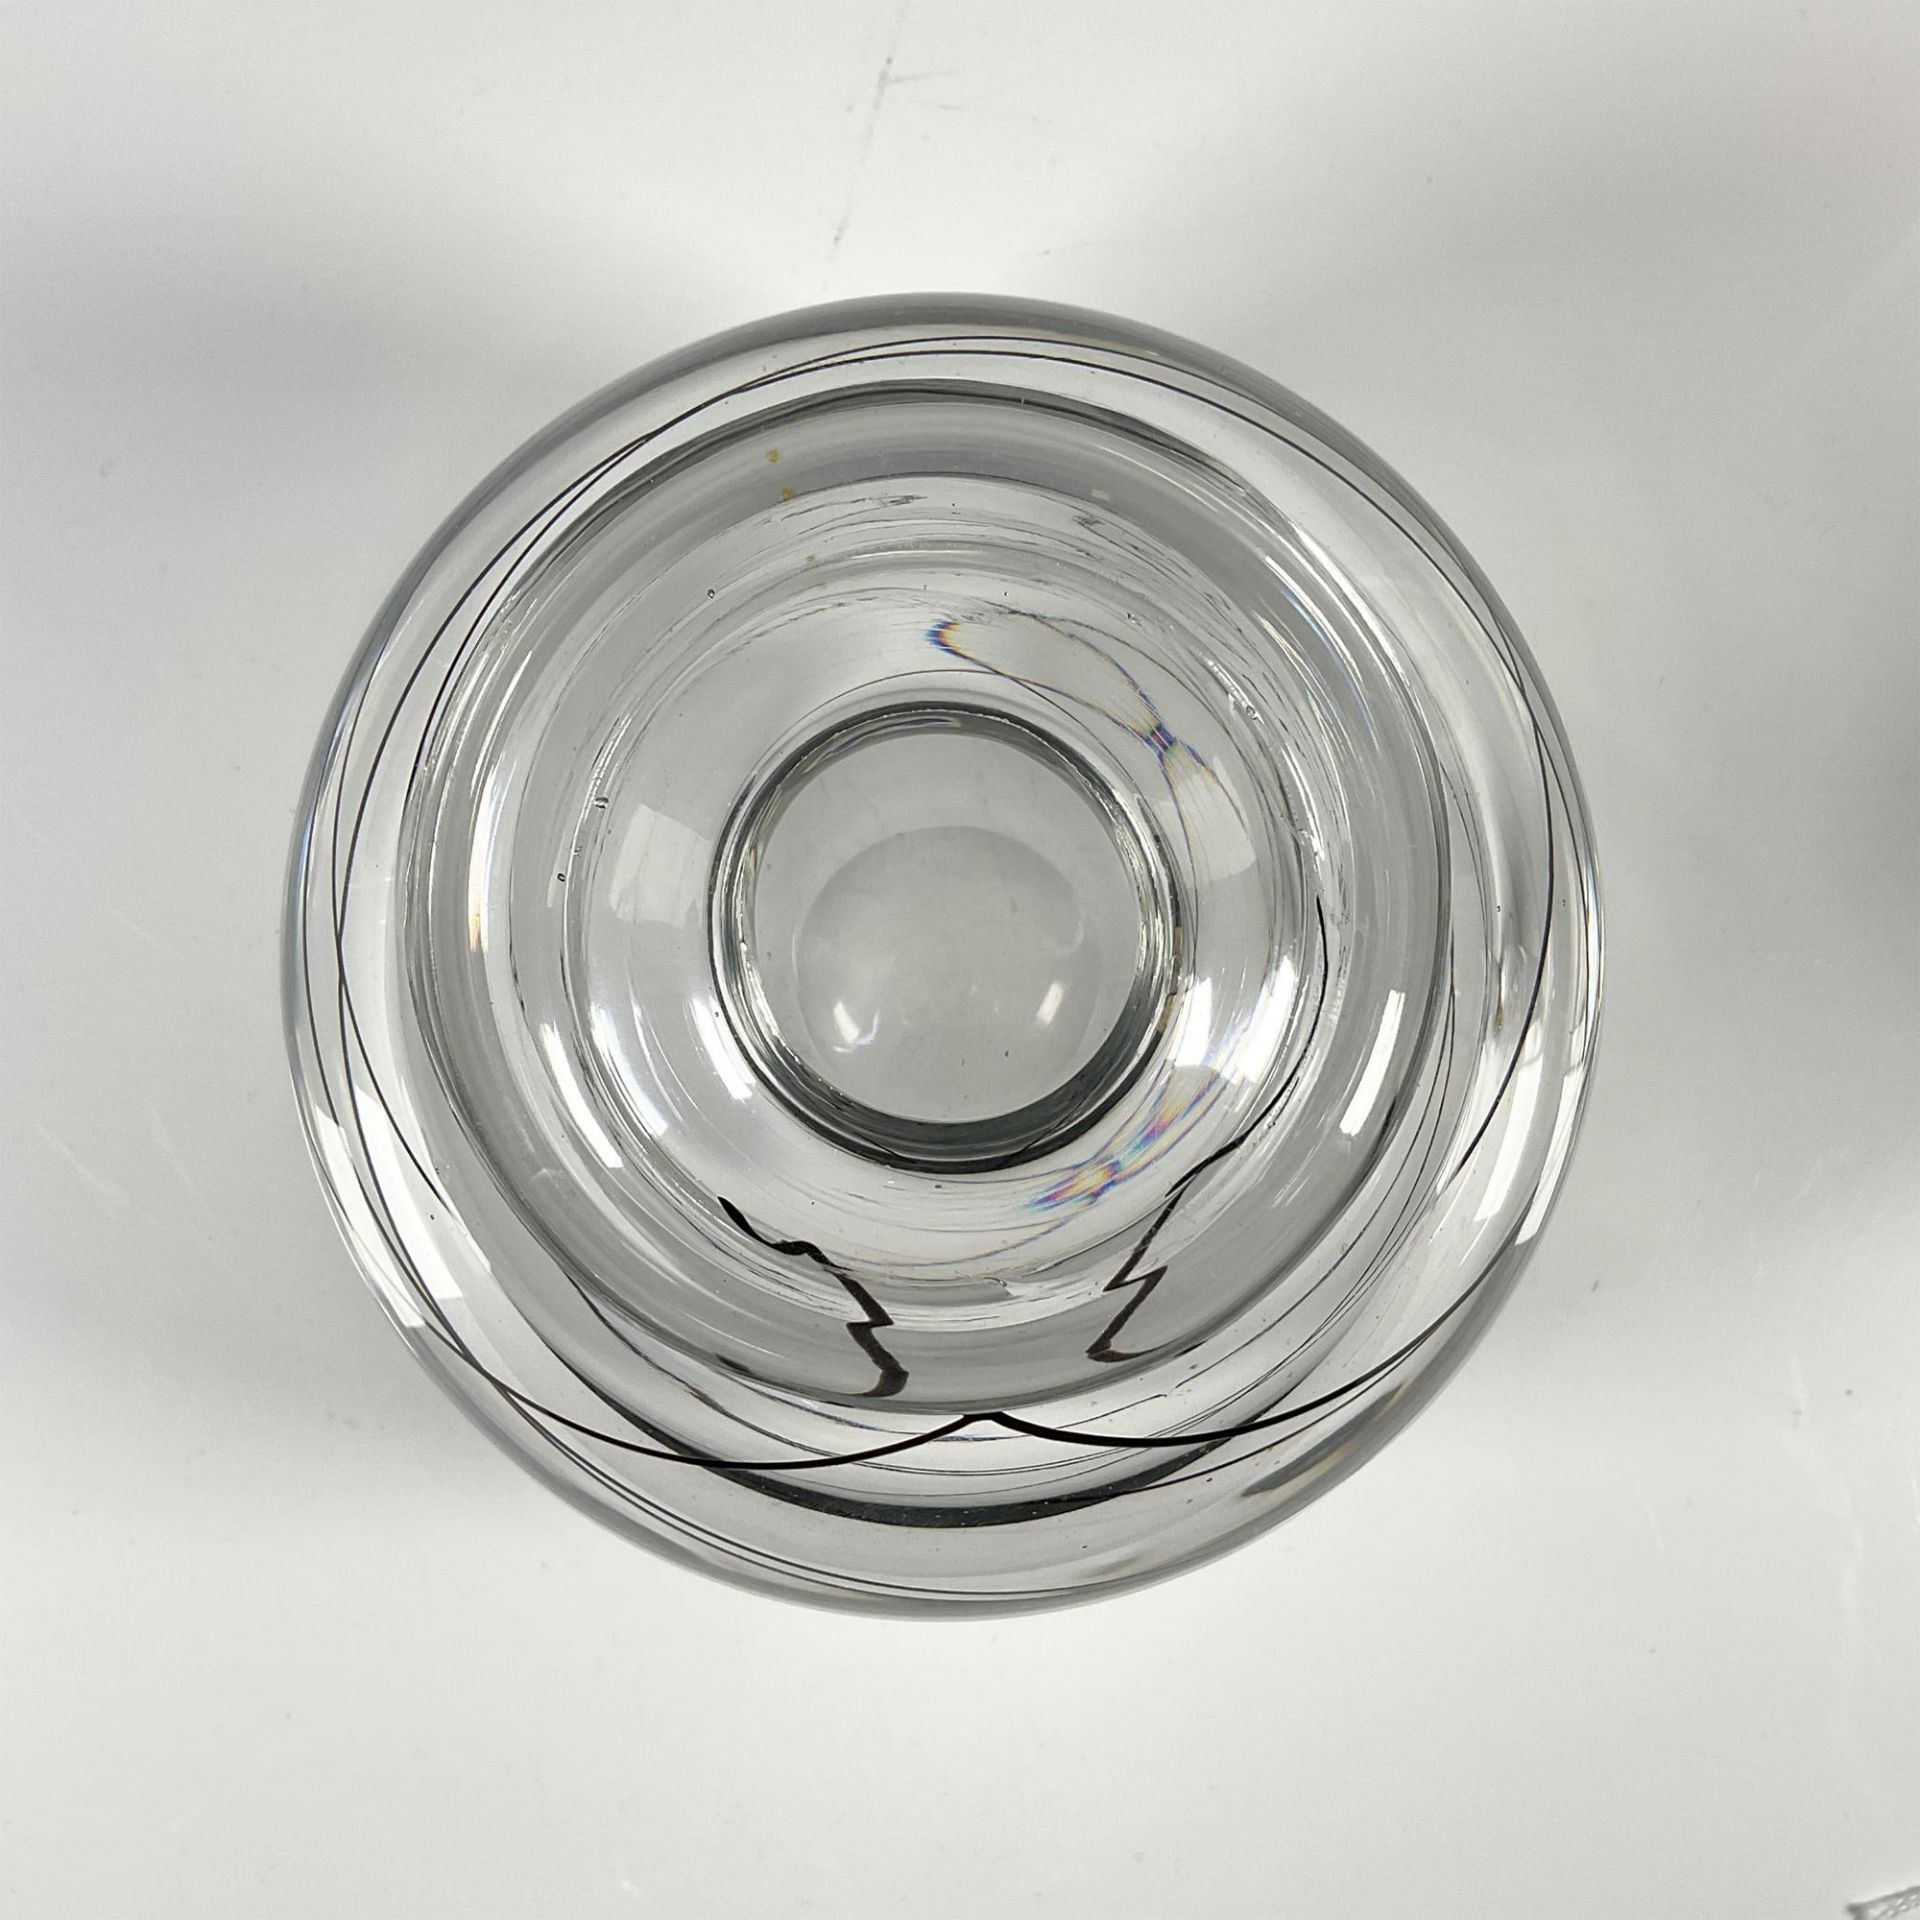 Kosta Boda Crystal Sphere Swirl Vase - Image 2 of 3